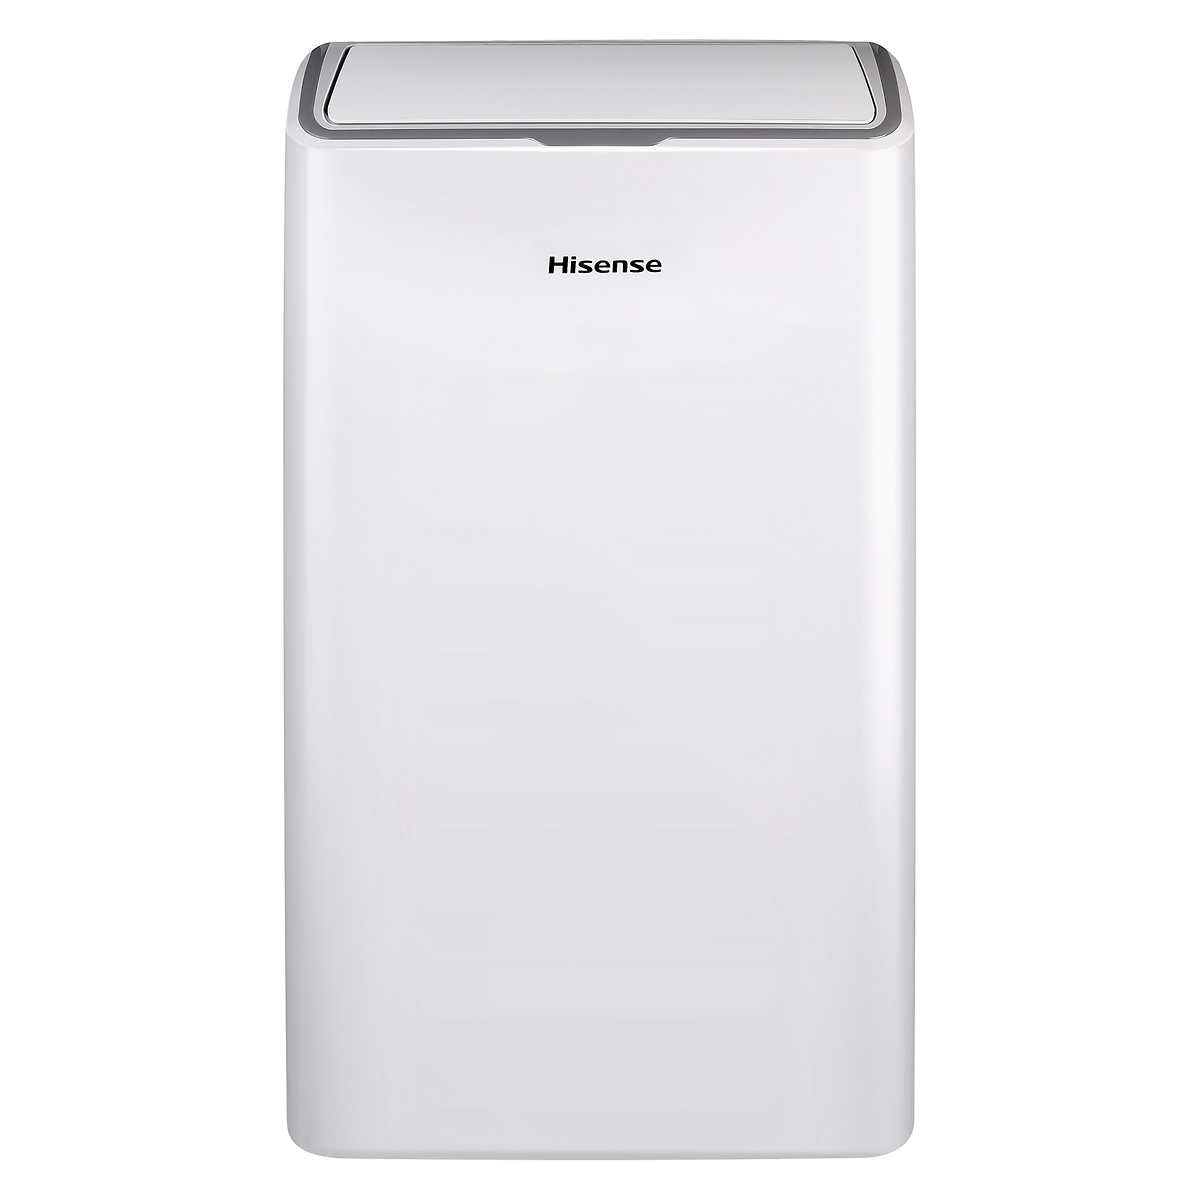 Hisense 12,000 BTU SACC Smart Portable Air Conditioner